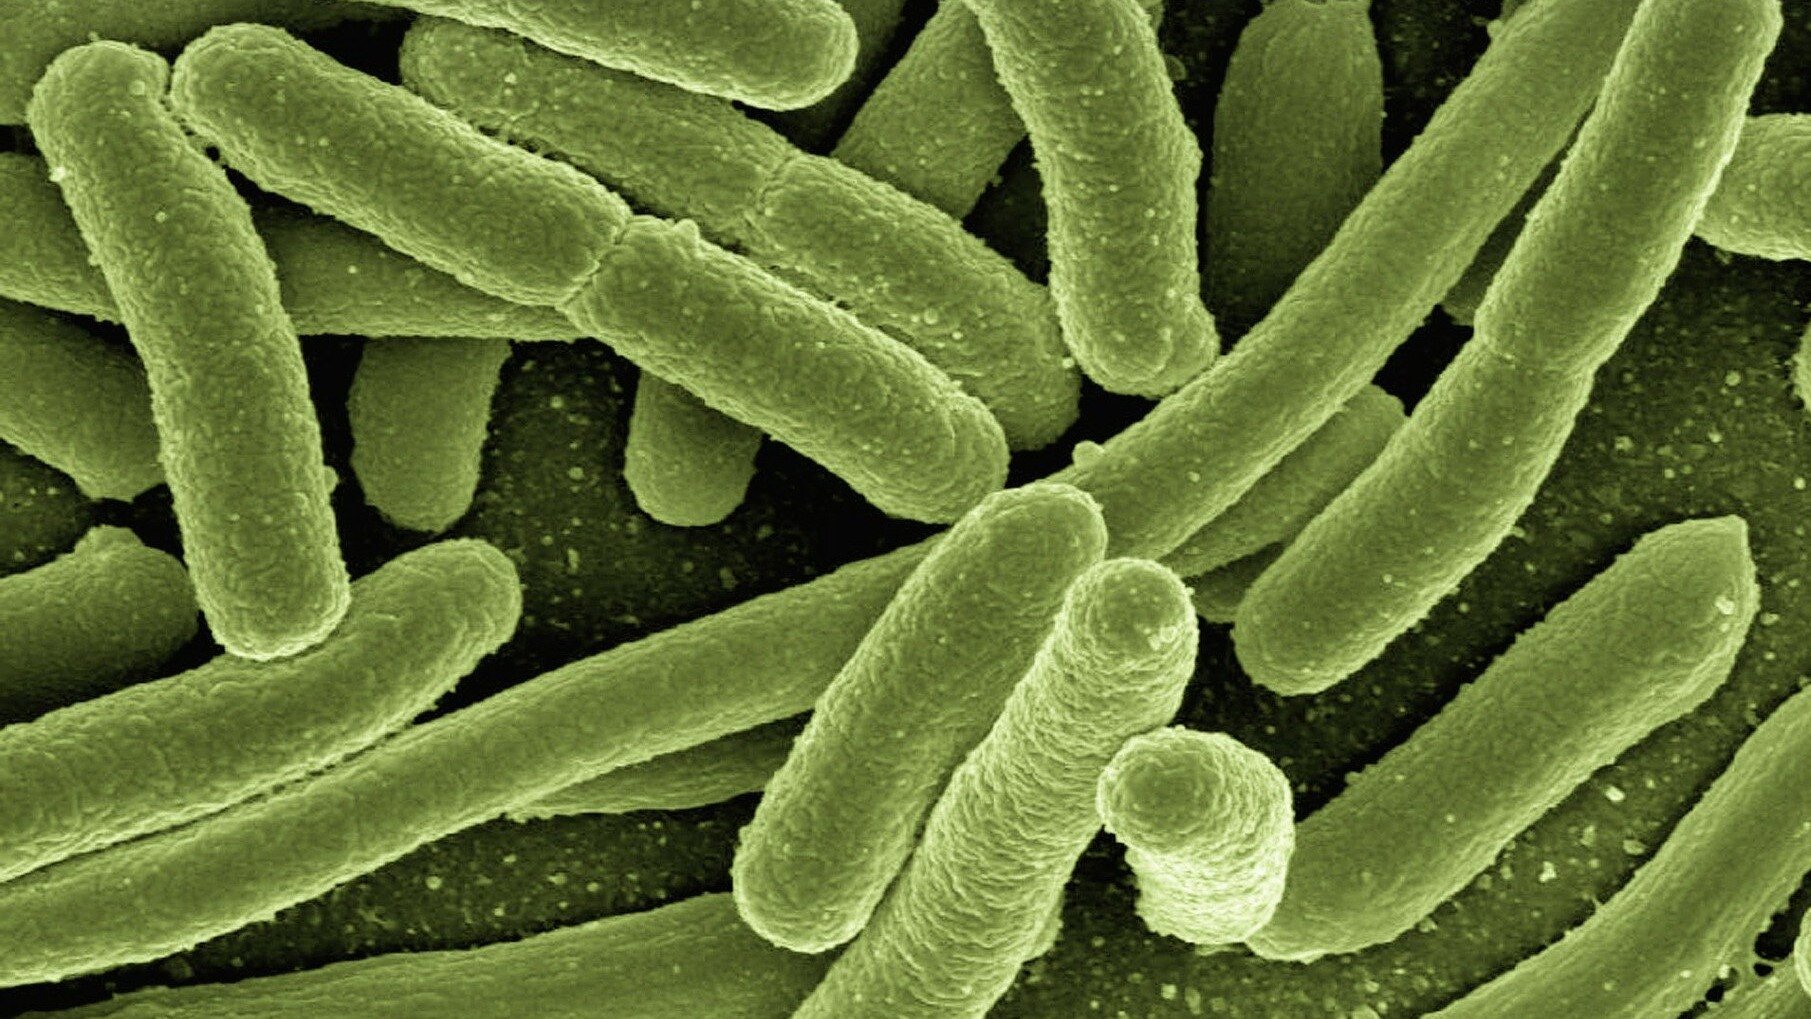 Harmless or deadly New study examines evolution of E. coli bacteria